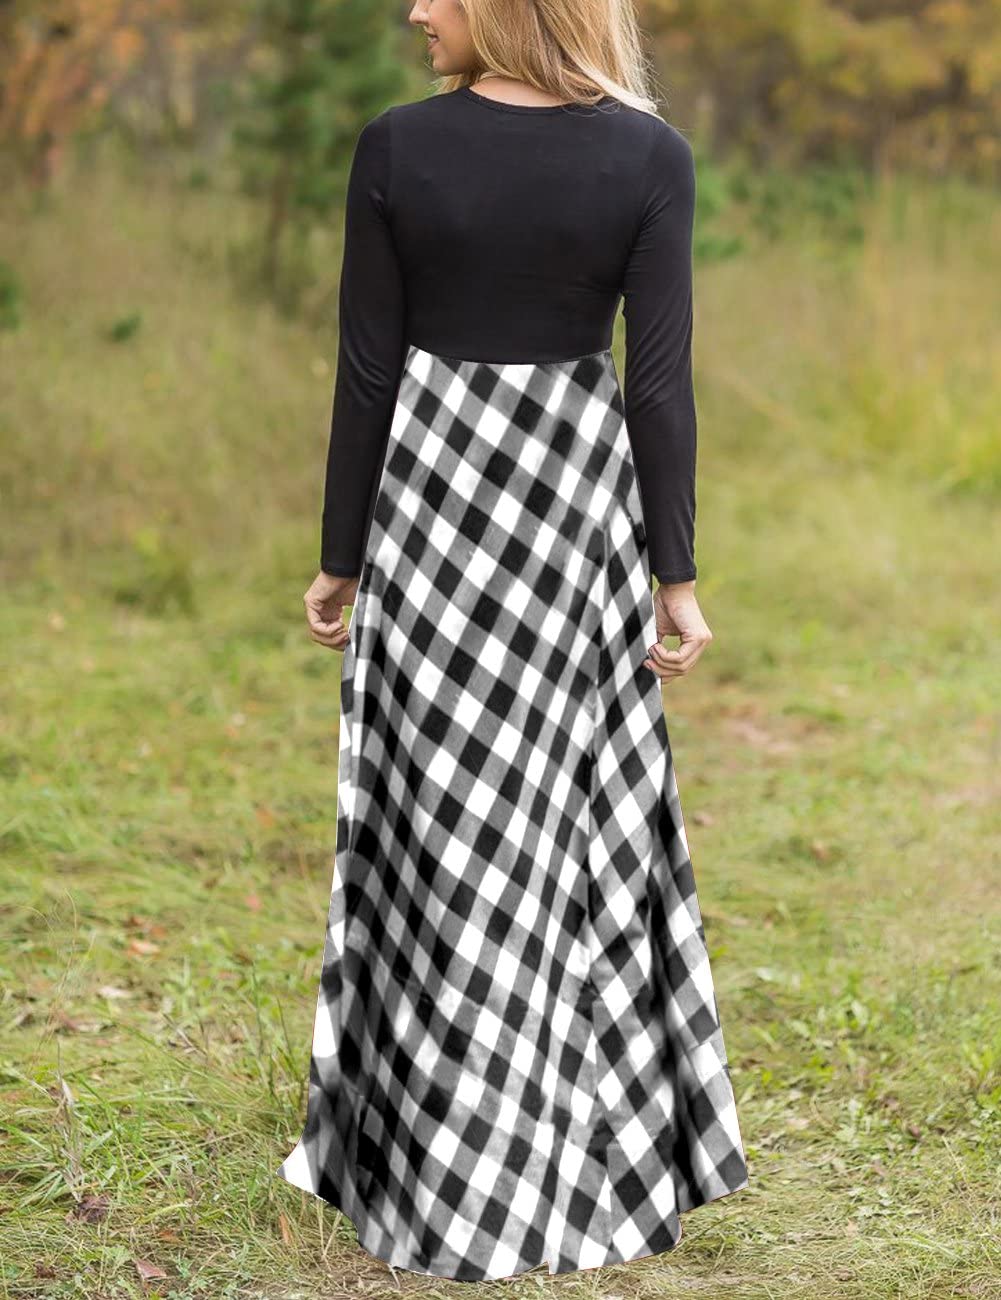 MEROKEETY Women's Long Sleeve Plaid Empire Waist Full Length Maxi Dress with Pockets